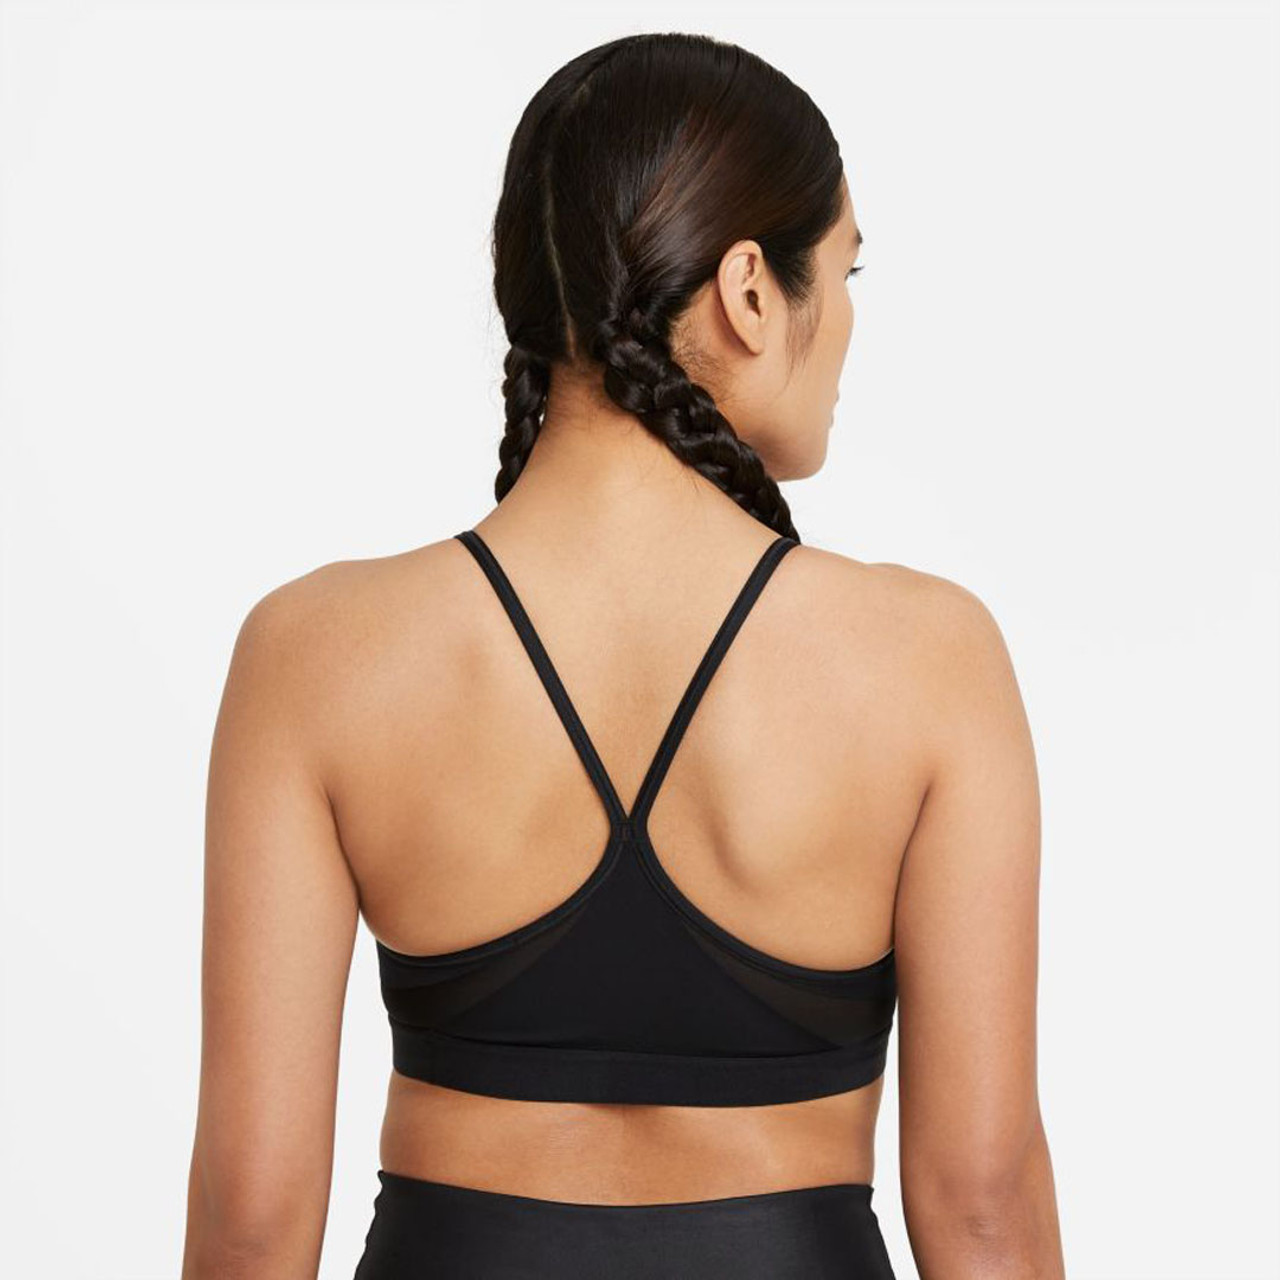 Nike Dri-fit black stretchy sports bra size small